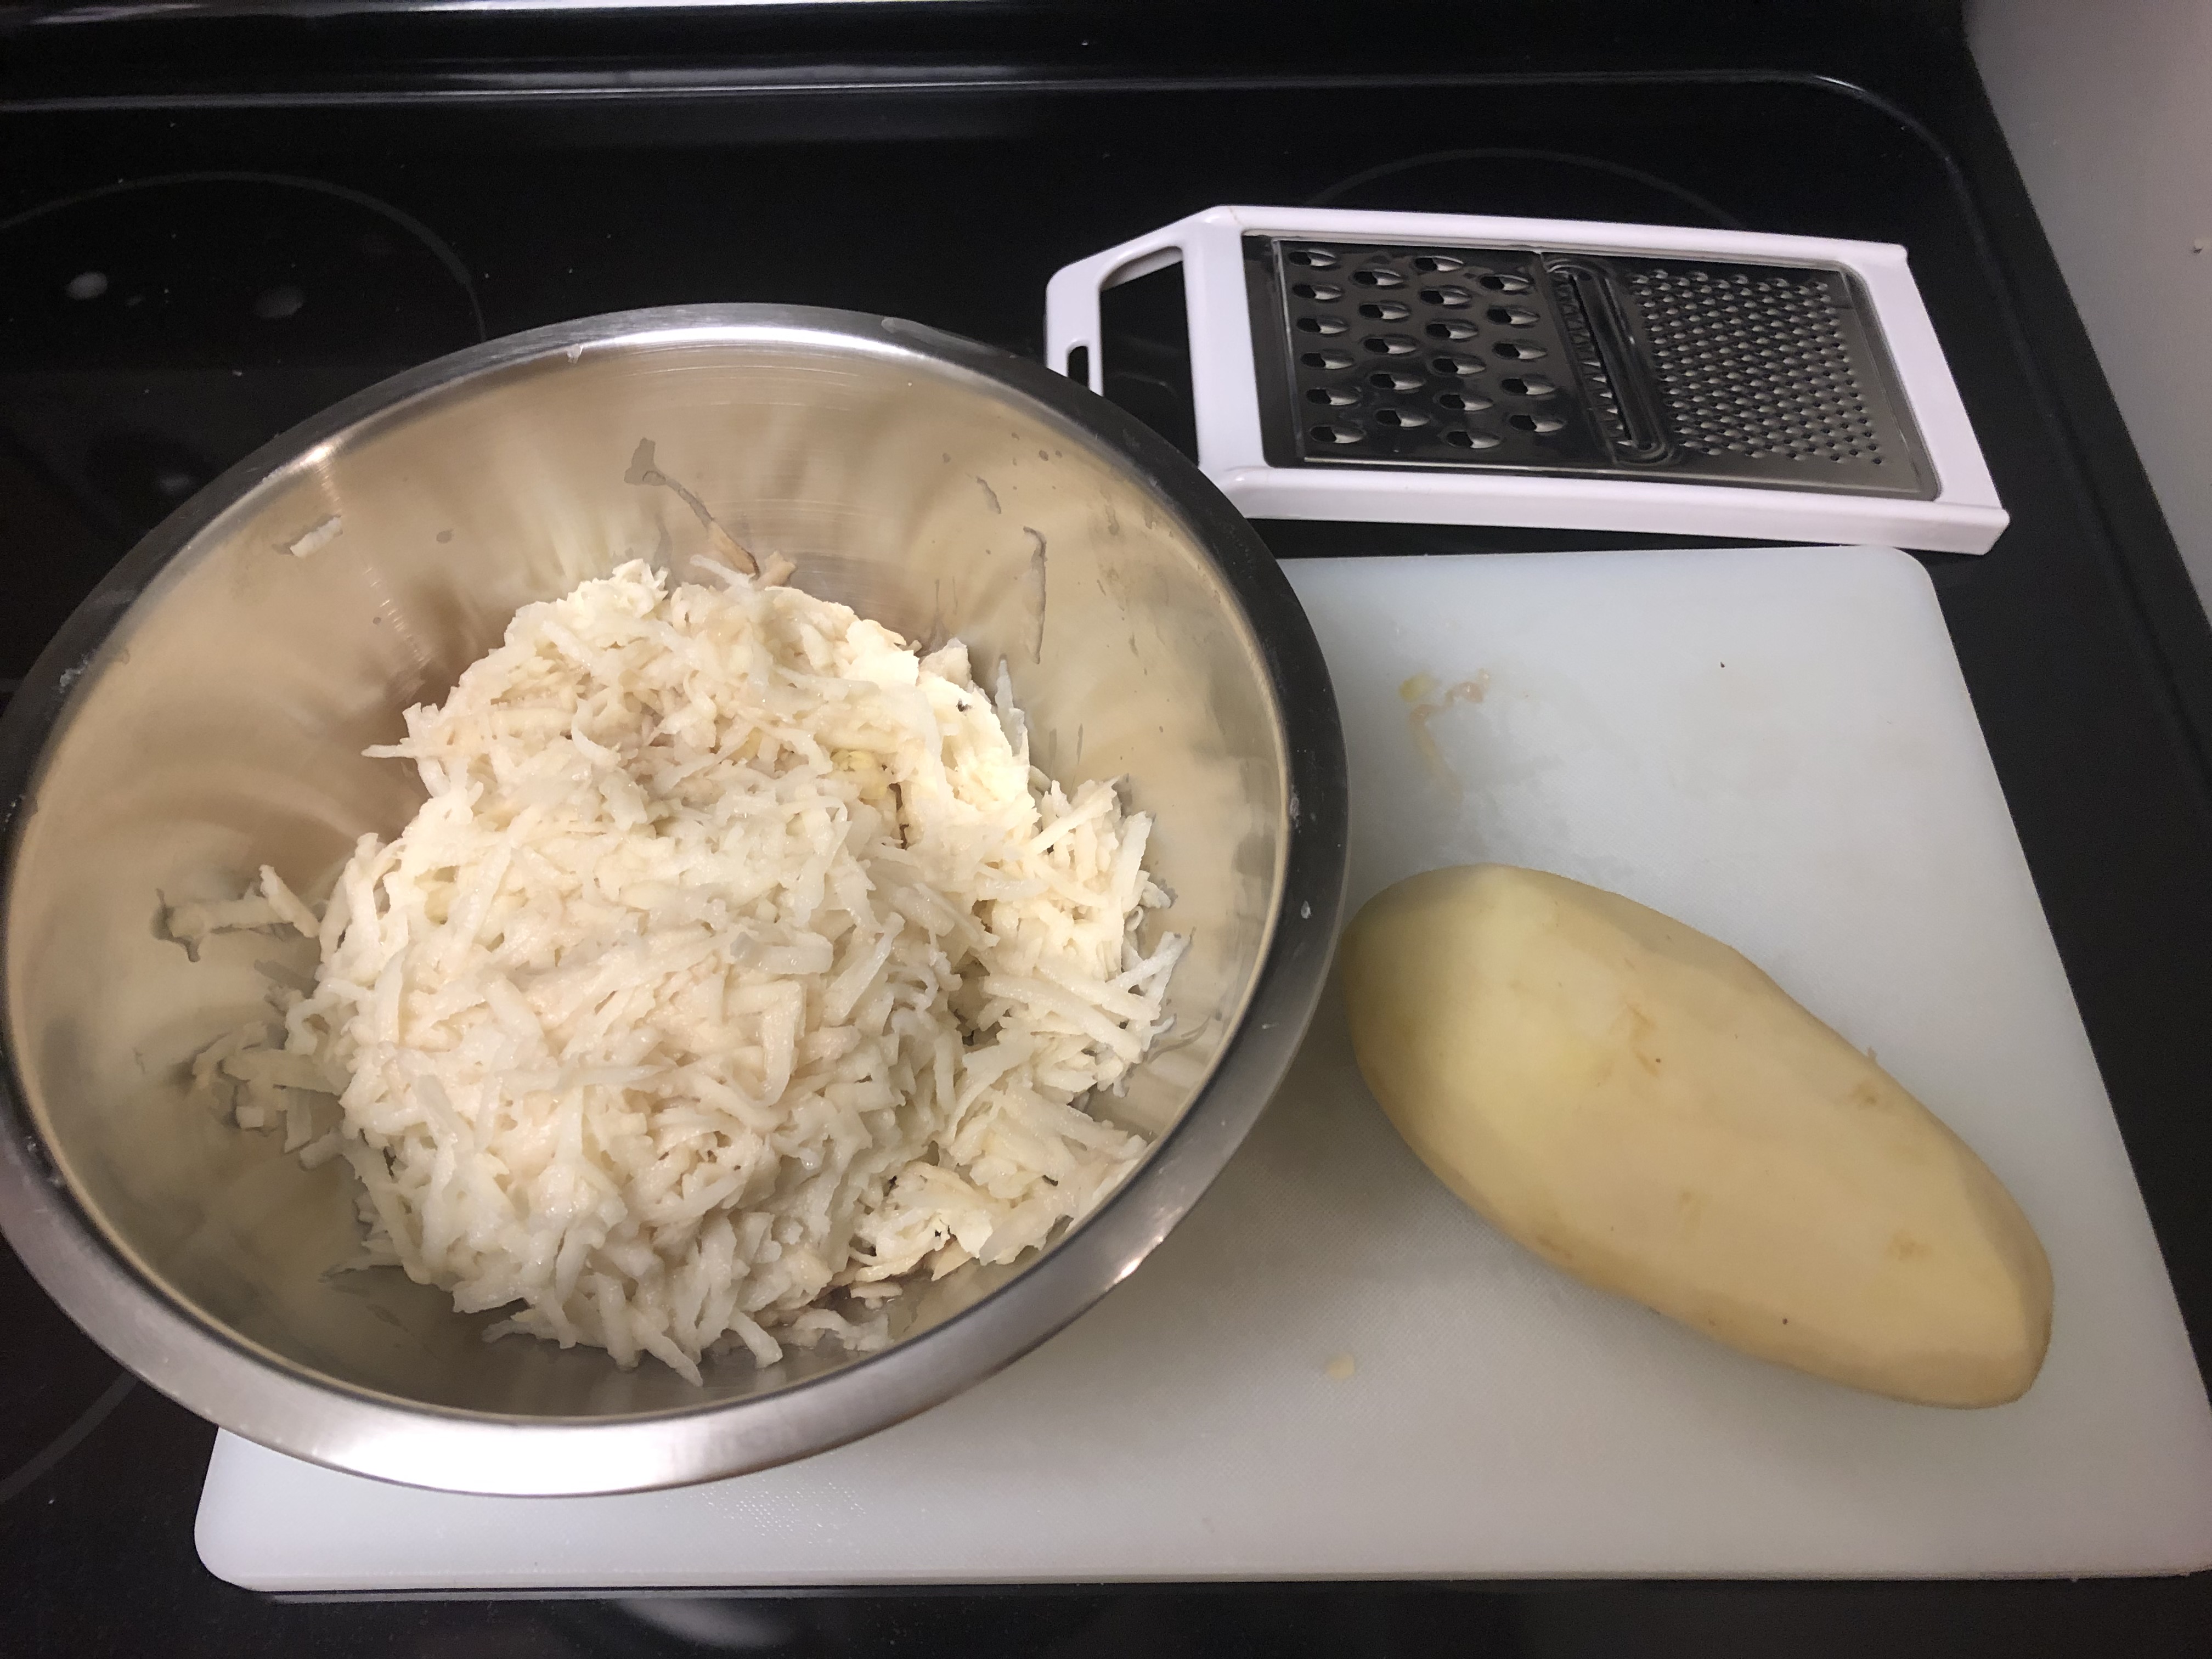 Shredding potatoes